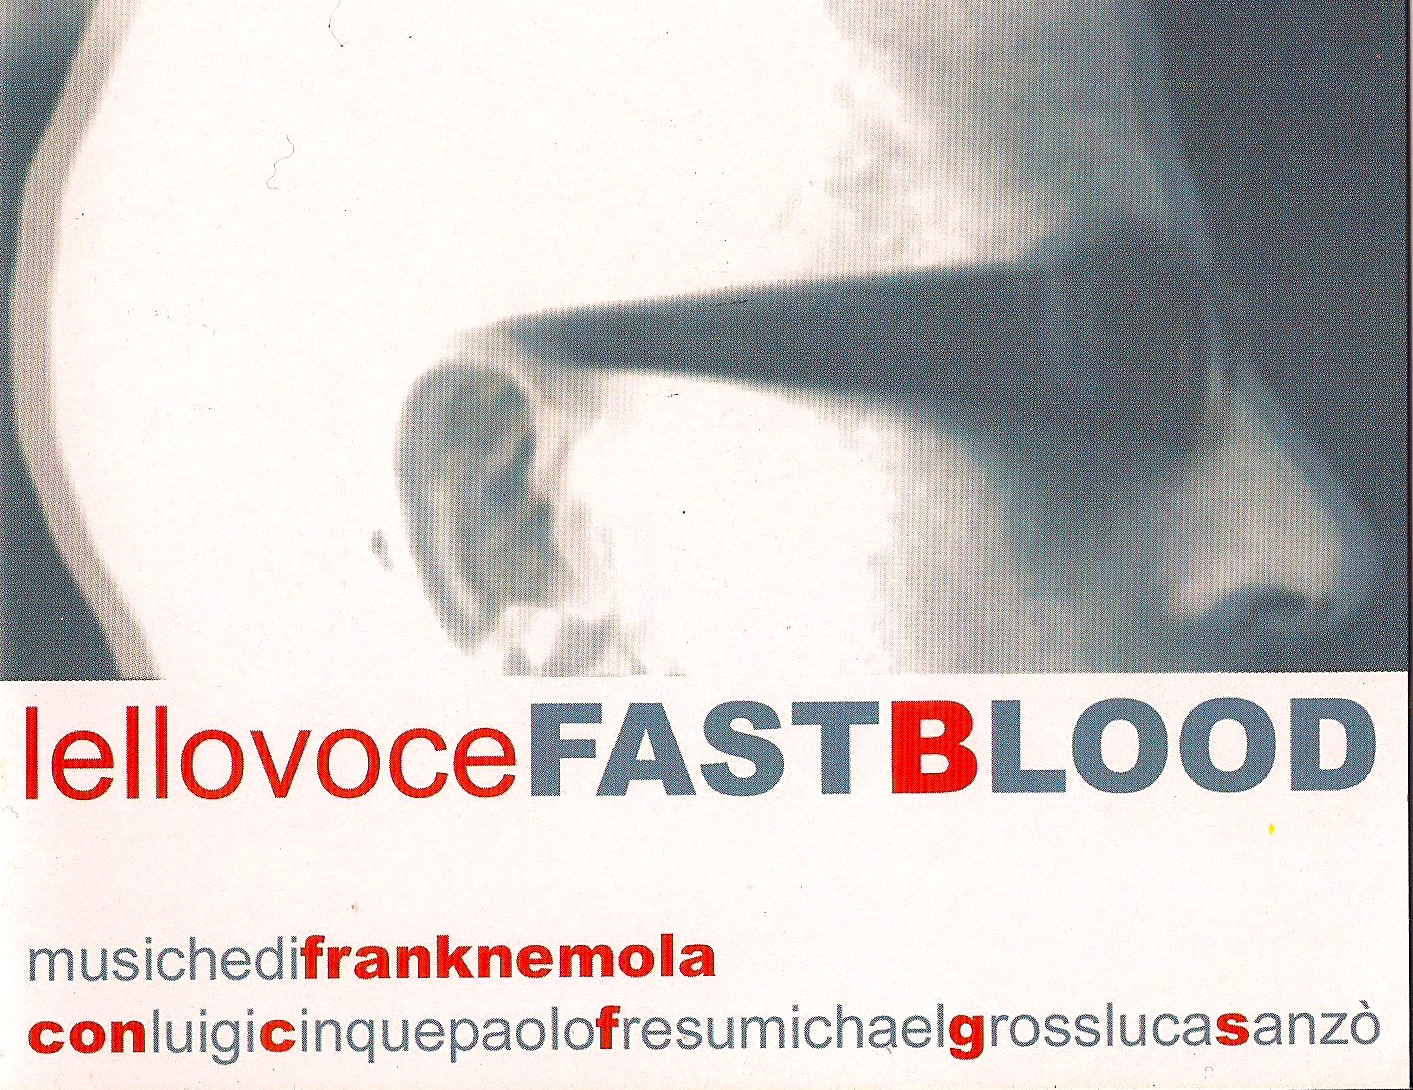 05. Fast Blood